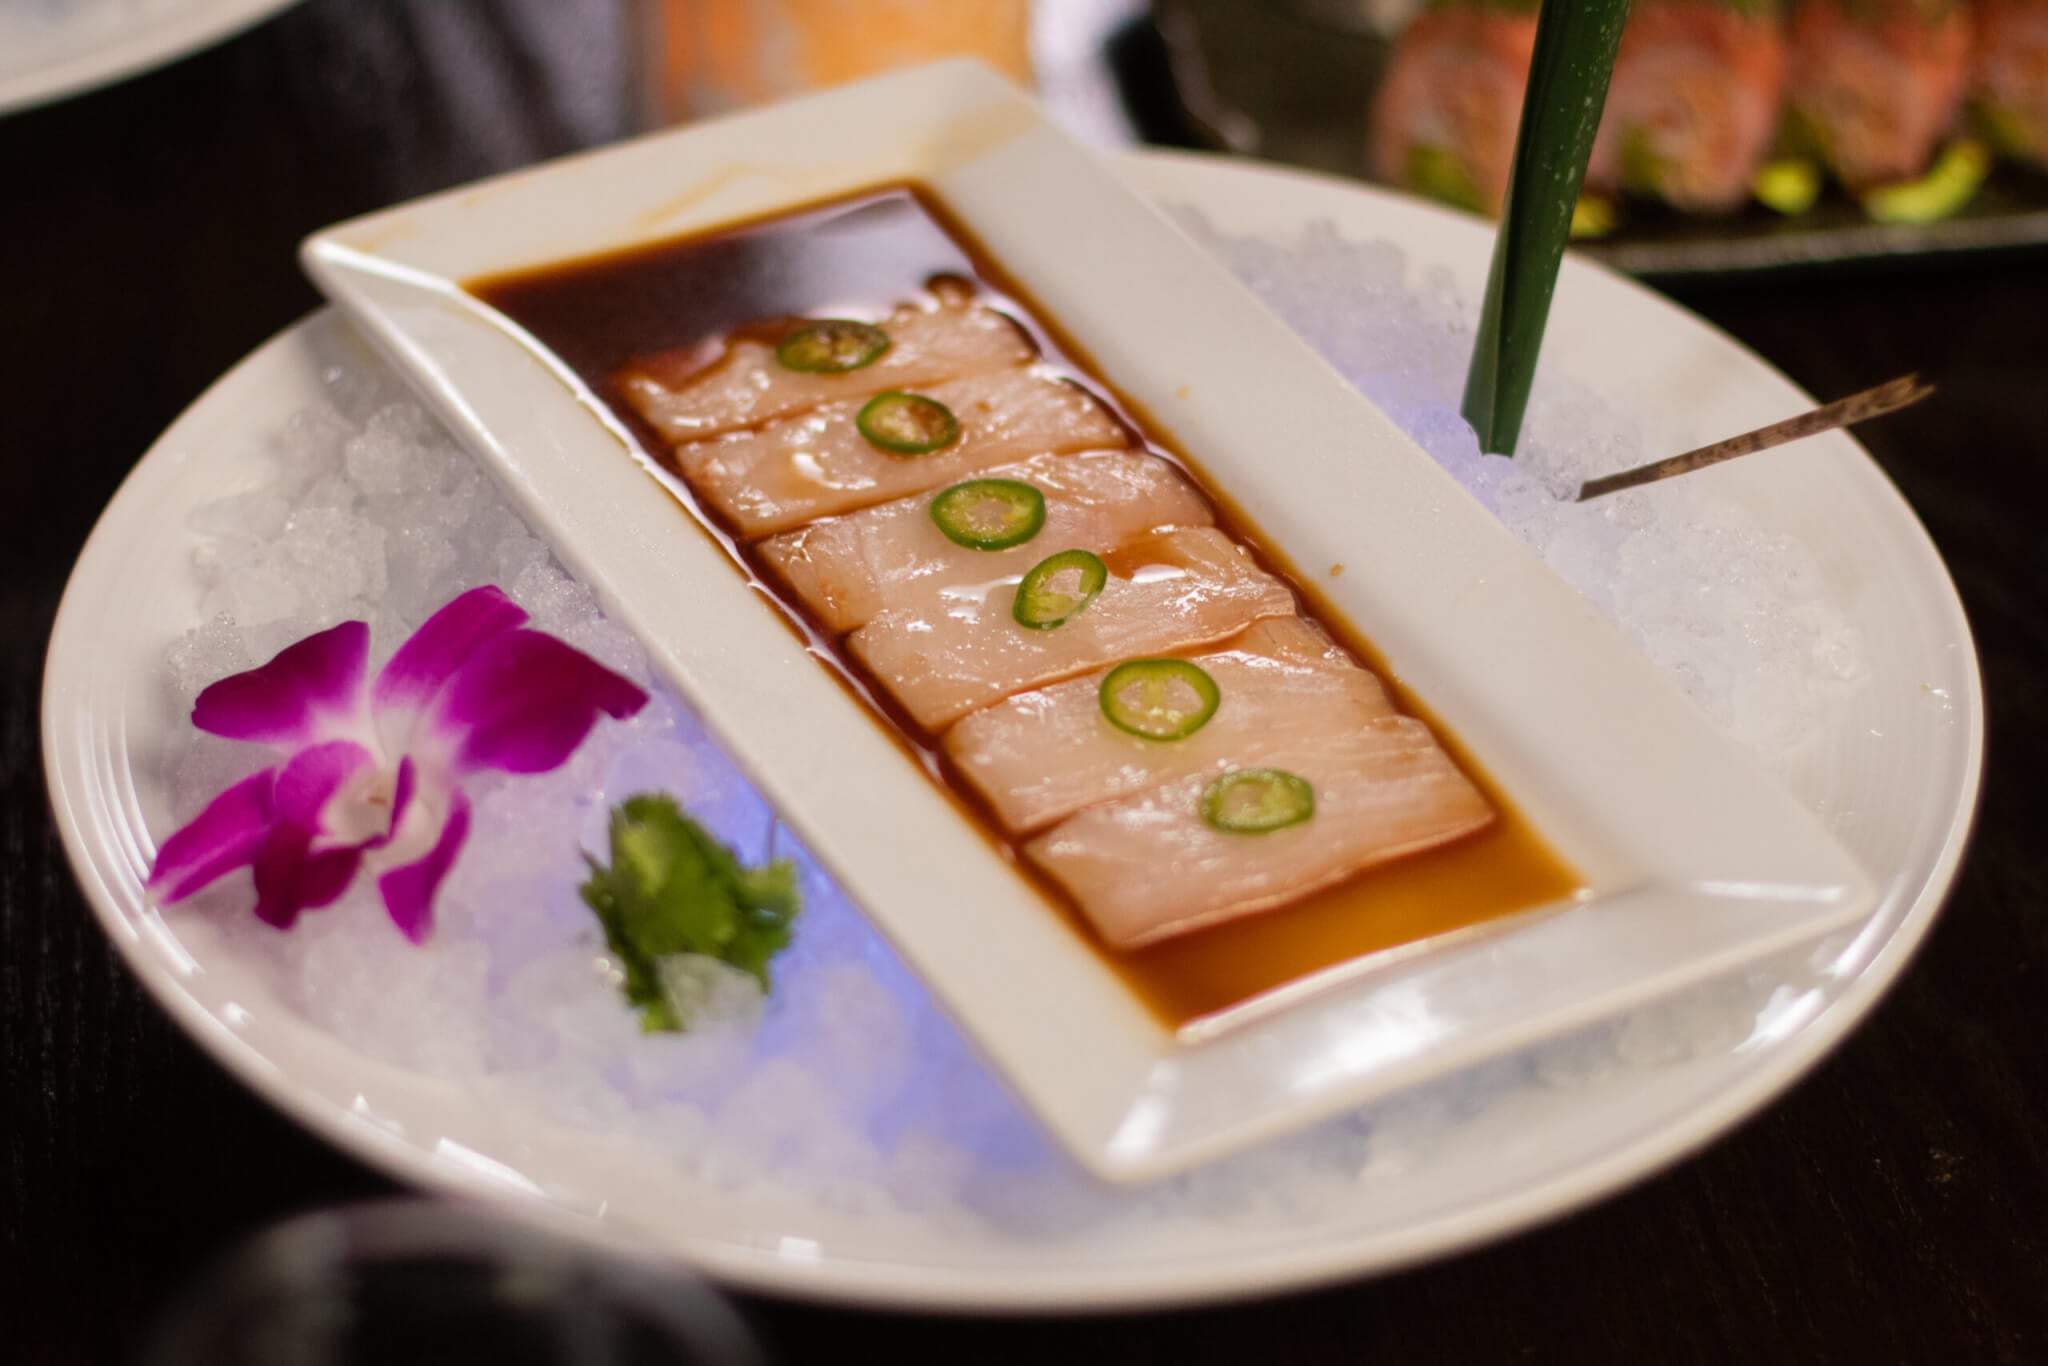 TAO Asian Bistro Las Vegas - Yellowtail Sashimi with Jalapeno and Ponzu Sauce